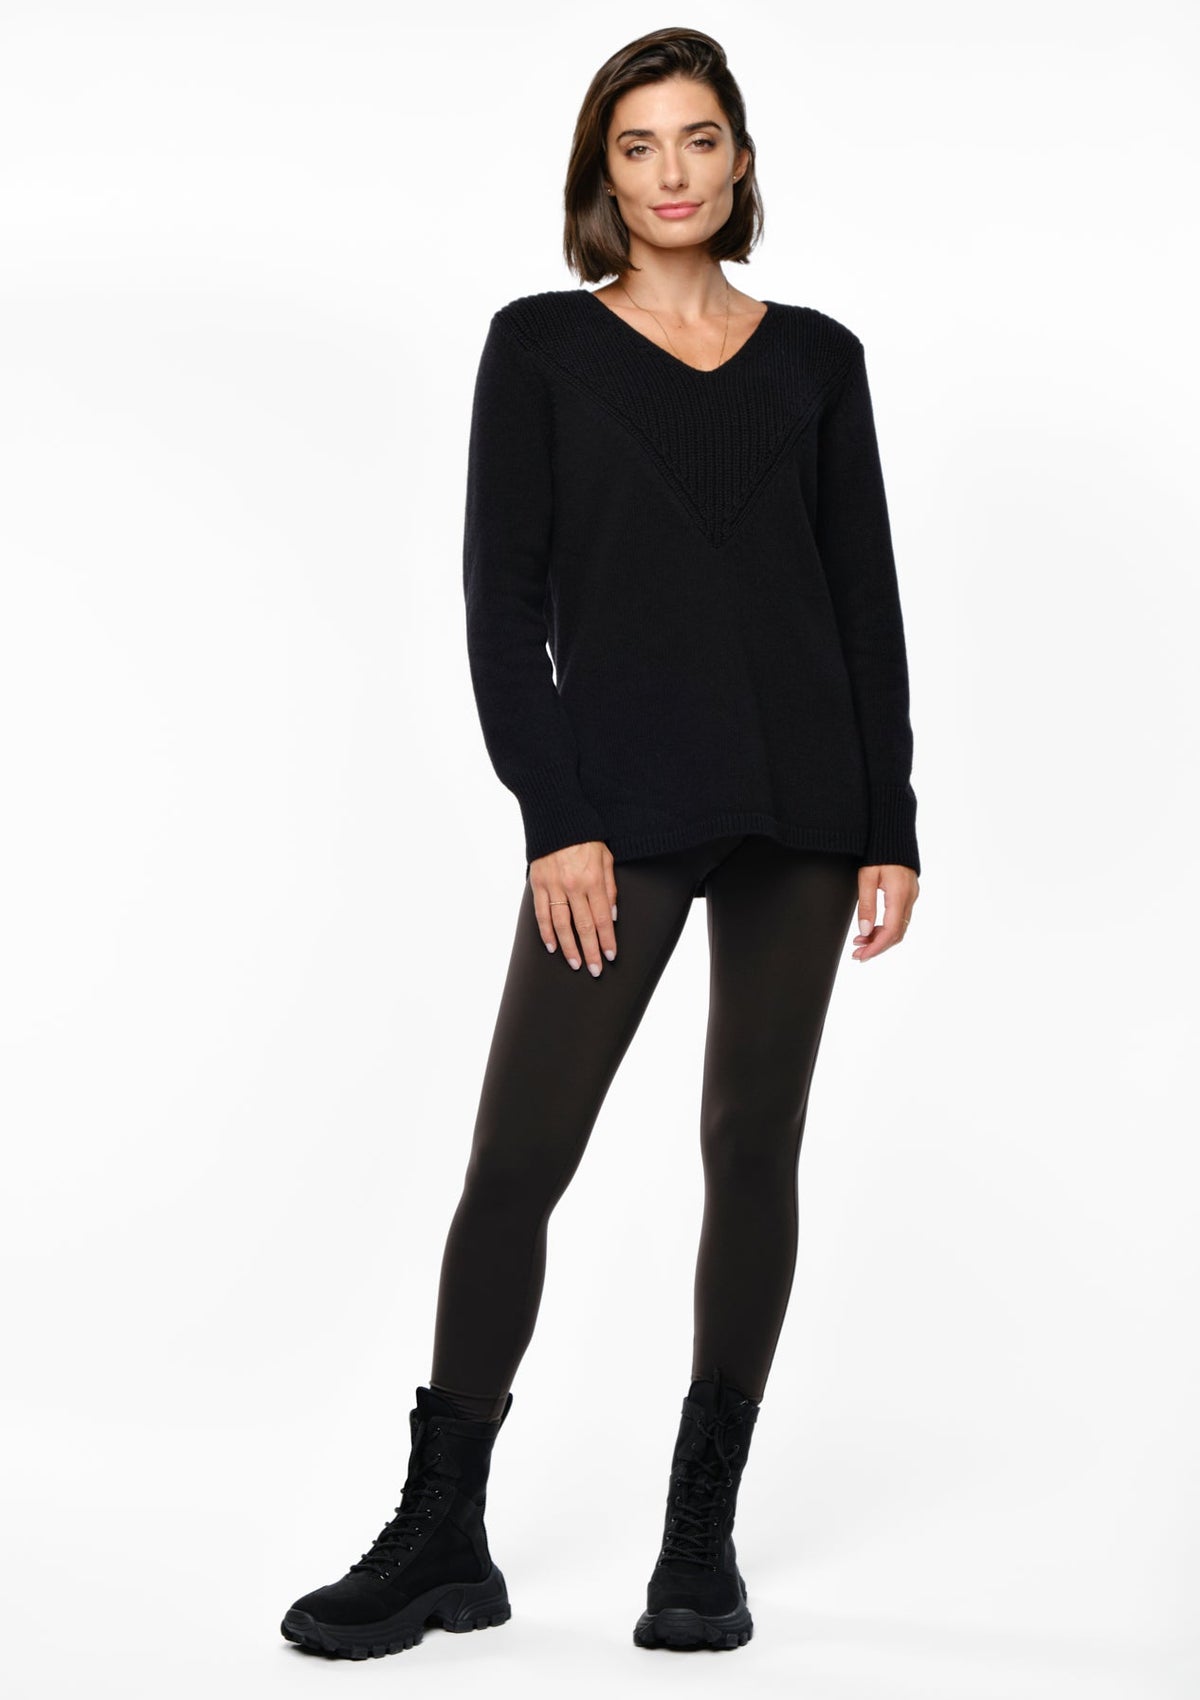 NEROLA Merino Cashmere Sweater black